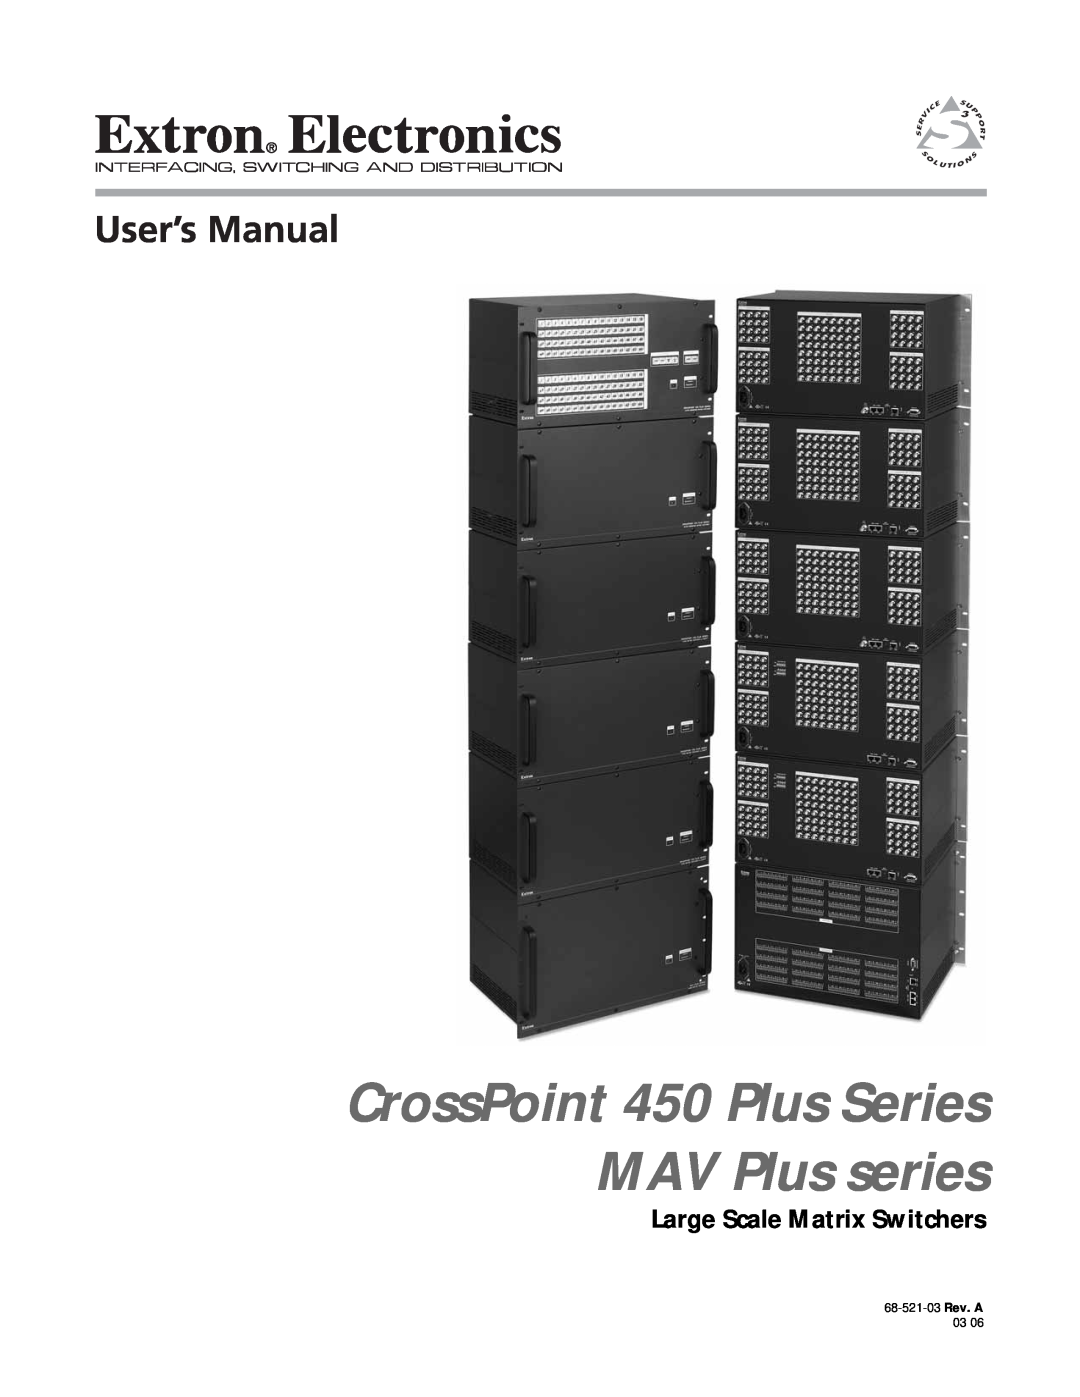 Extron electronic manual Large Scale Matrix Switchers, CrossPoint 450 Plus Series MAV Plus series, 68-521-03 Rev. A 